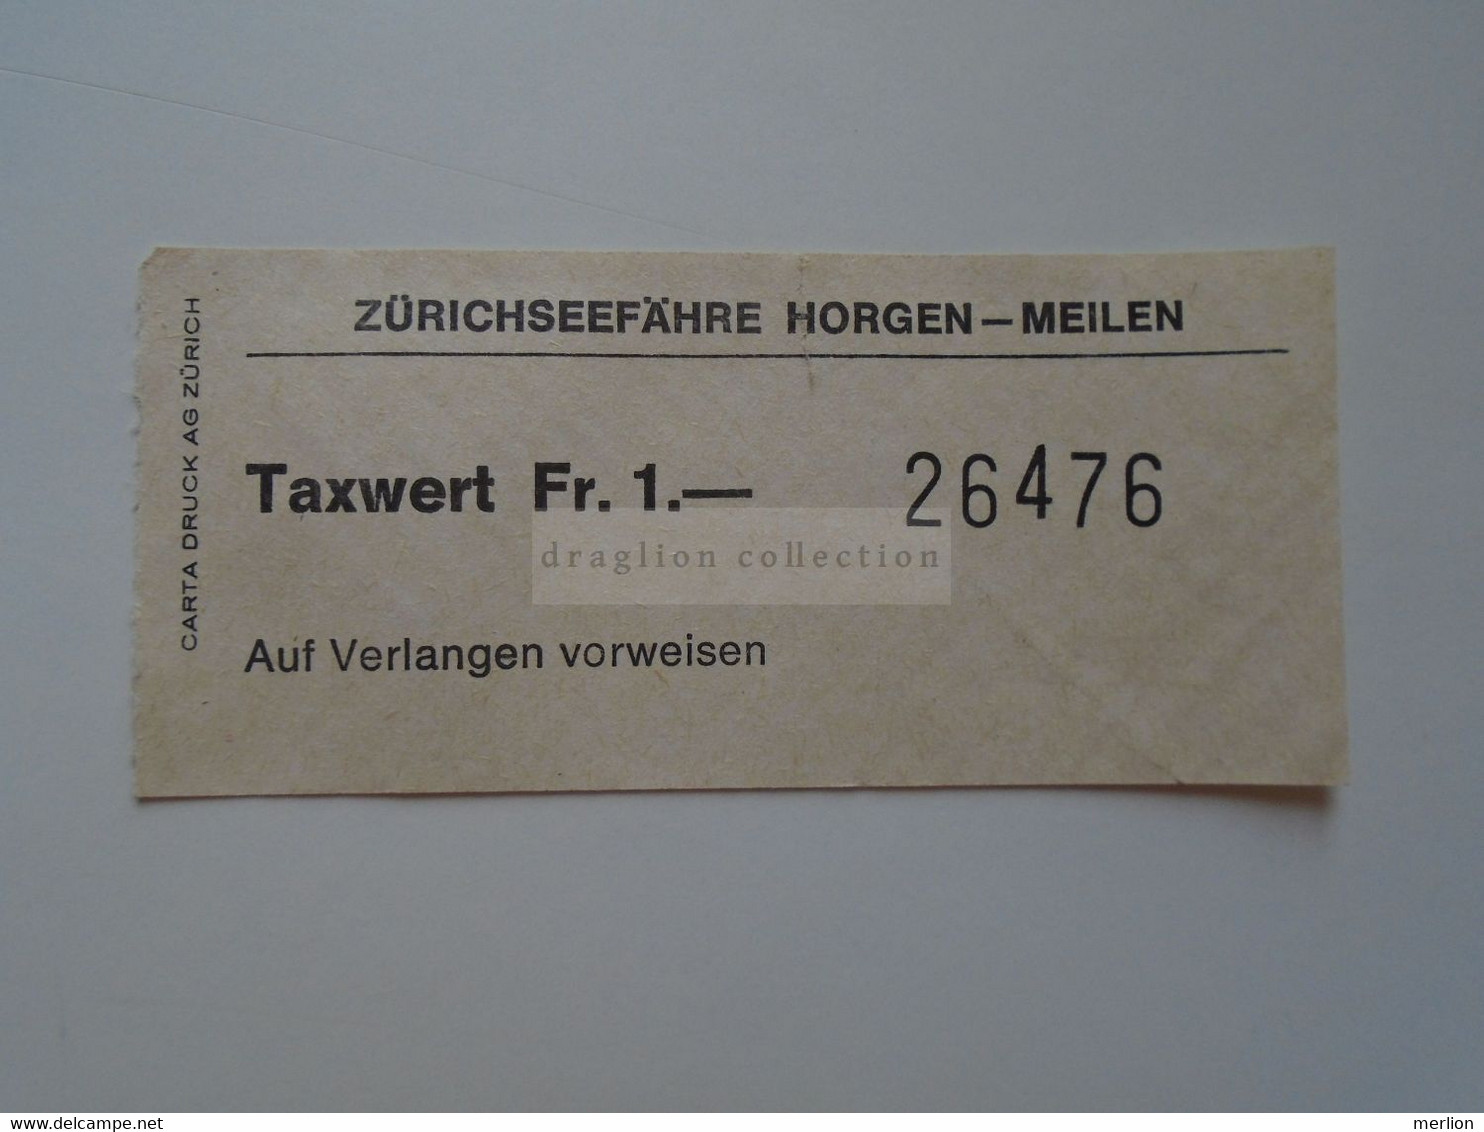 DT009  Switzerland  Schweiz - Zürichseefähre Horgen - Meilen - Fahrkarte Taxwert Fr. 1.-  Ticket  Ca 1960-80 - Europe